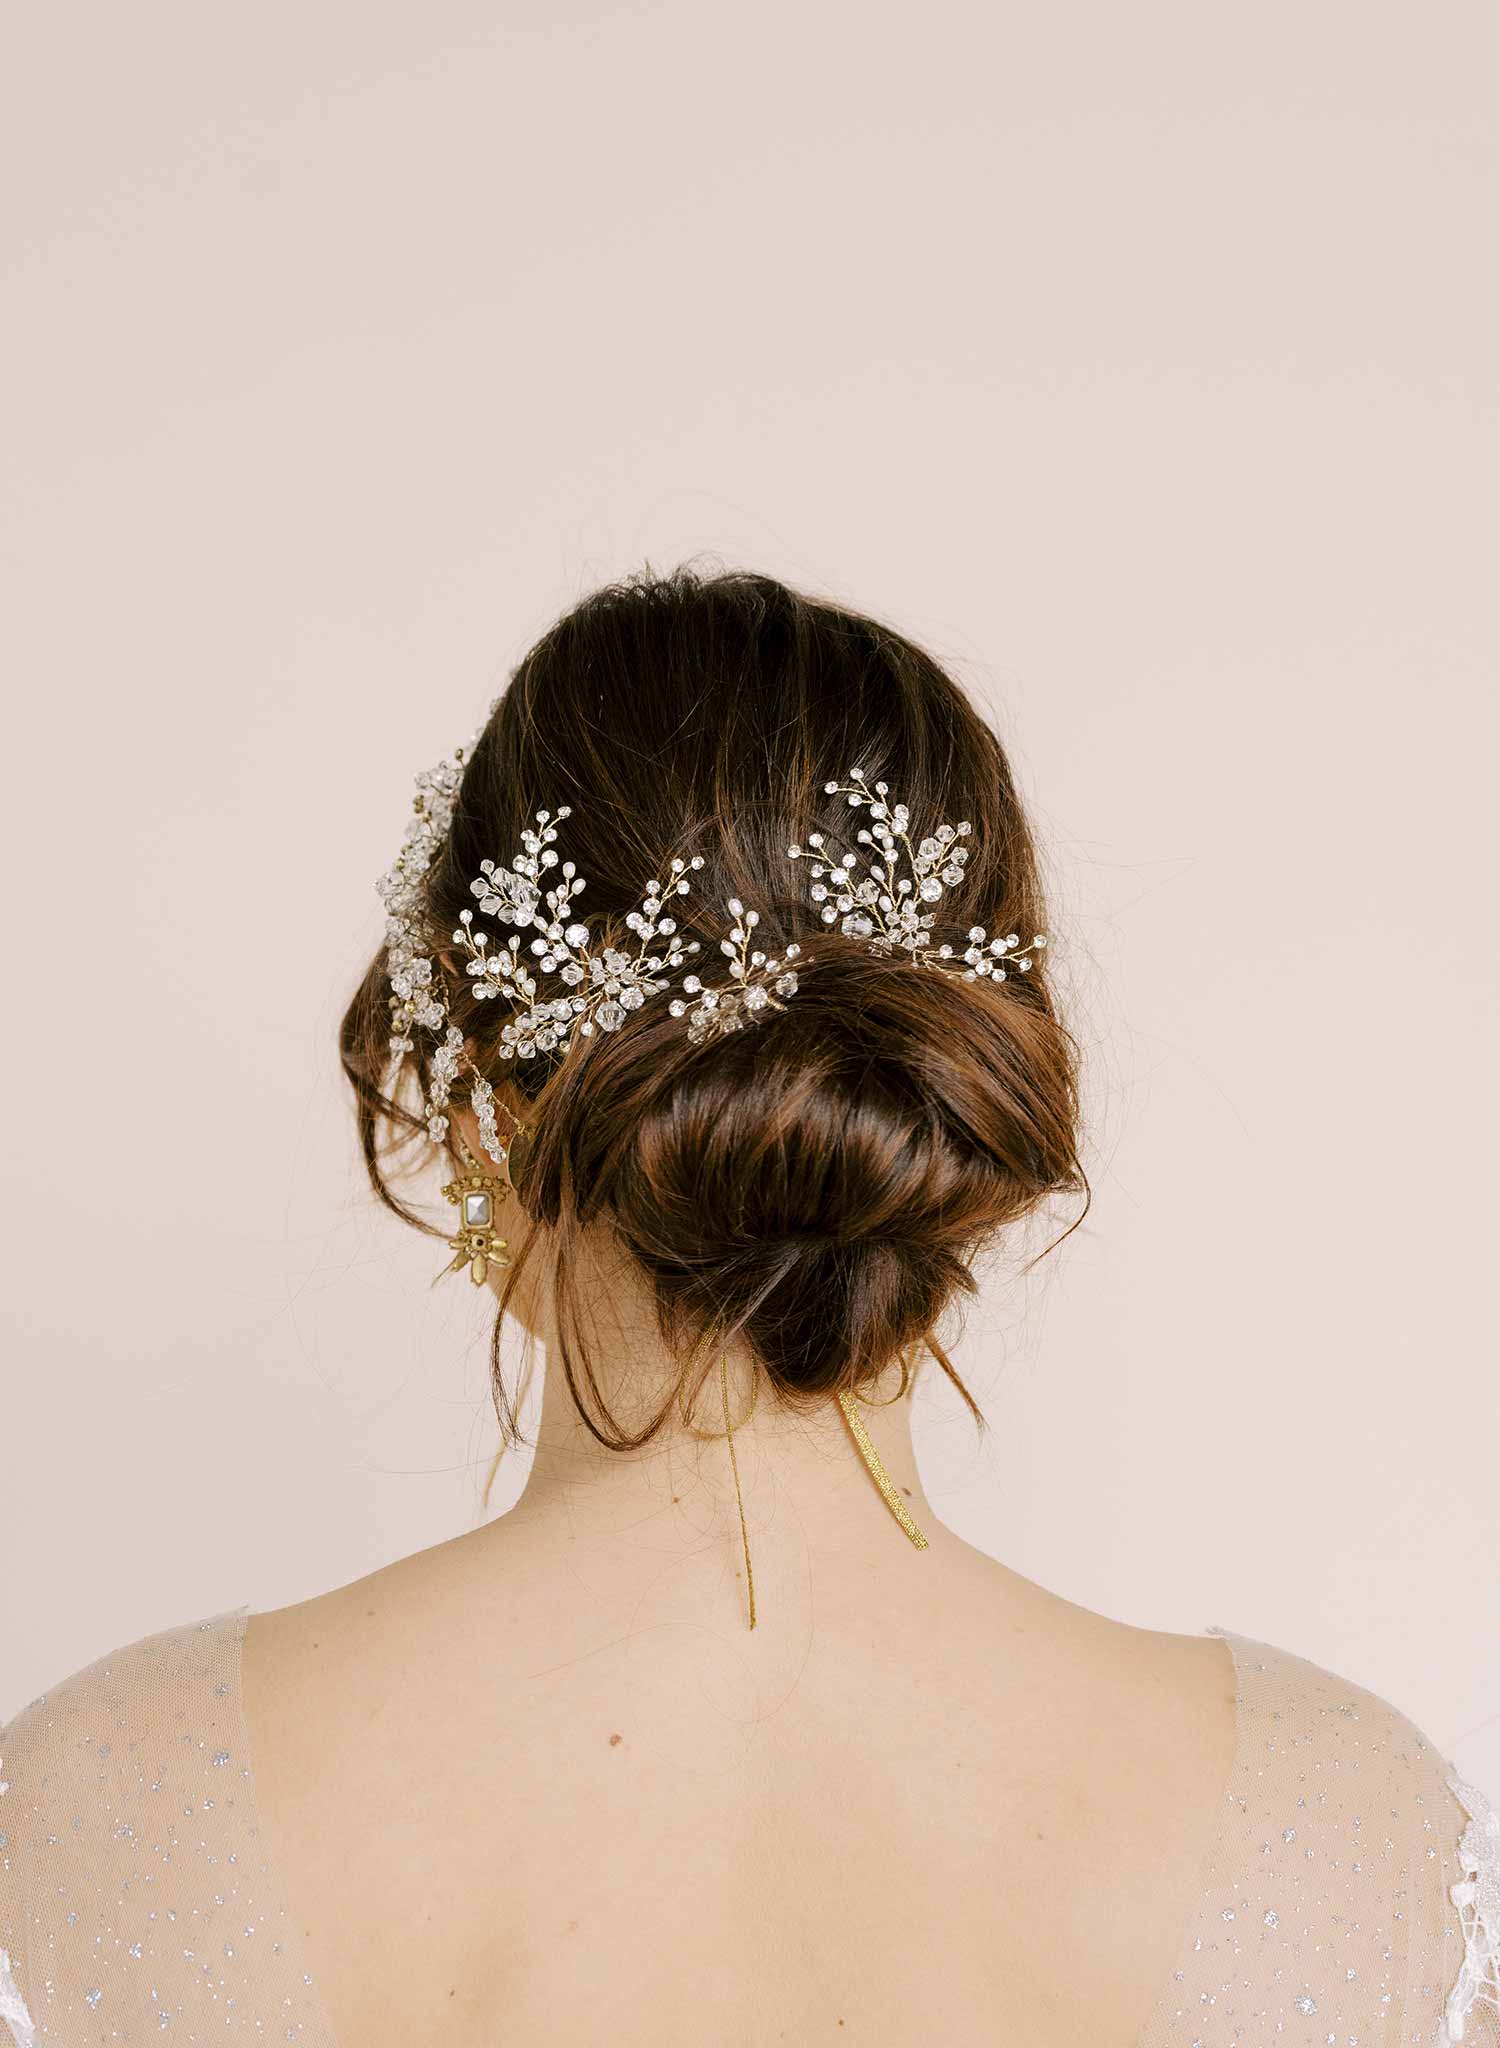 Bridal crystal hair accessories, bobby pins - Crystal baby's breath pin set of 3 - | Twigs & Honey LLC